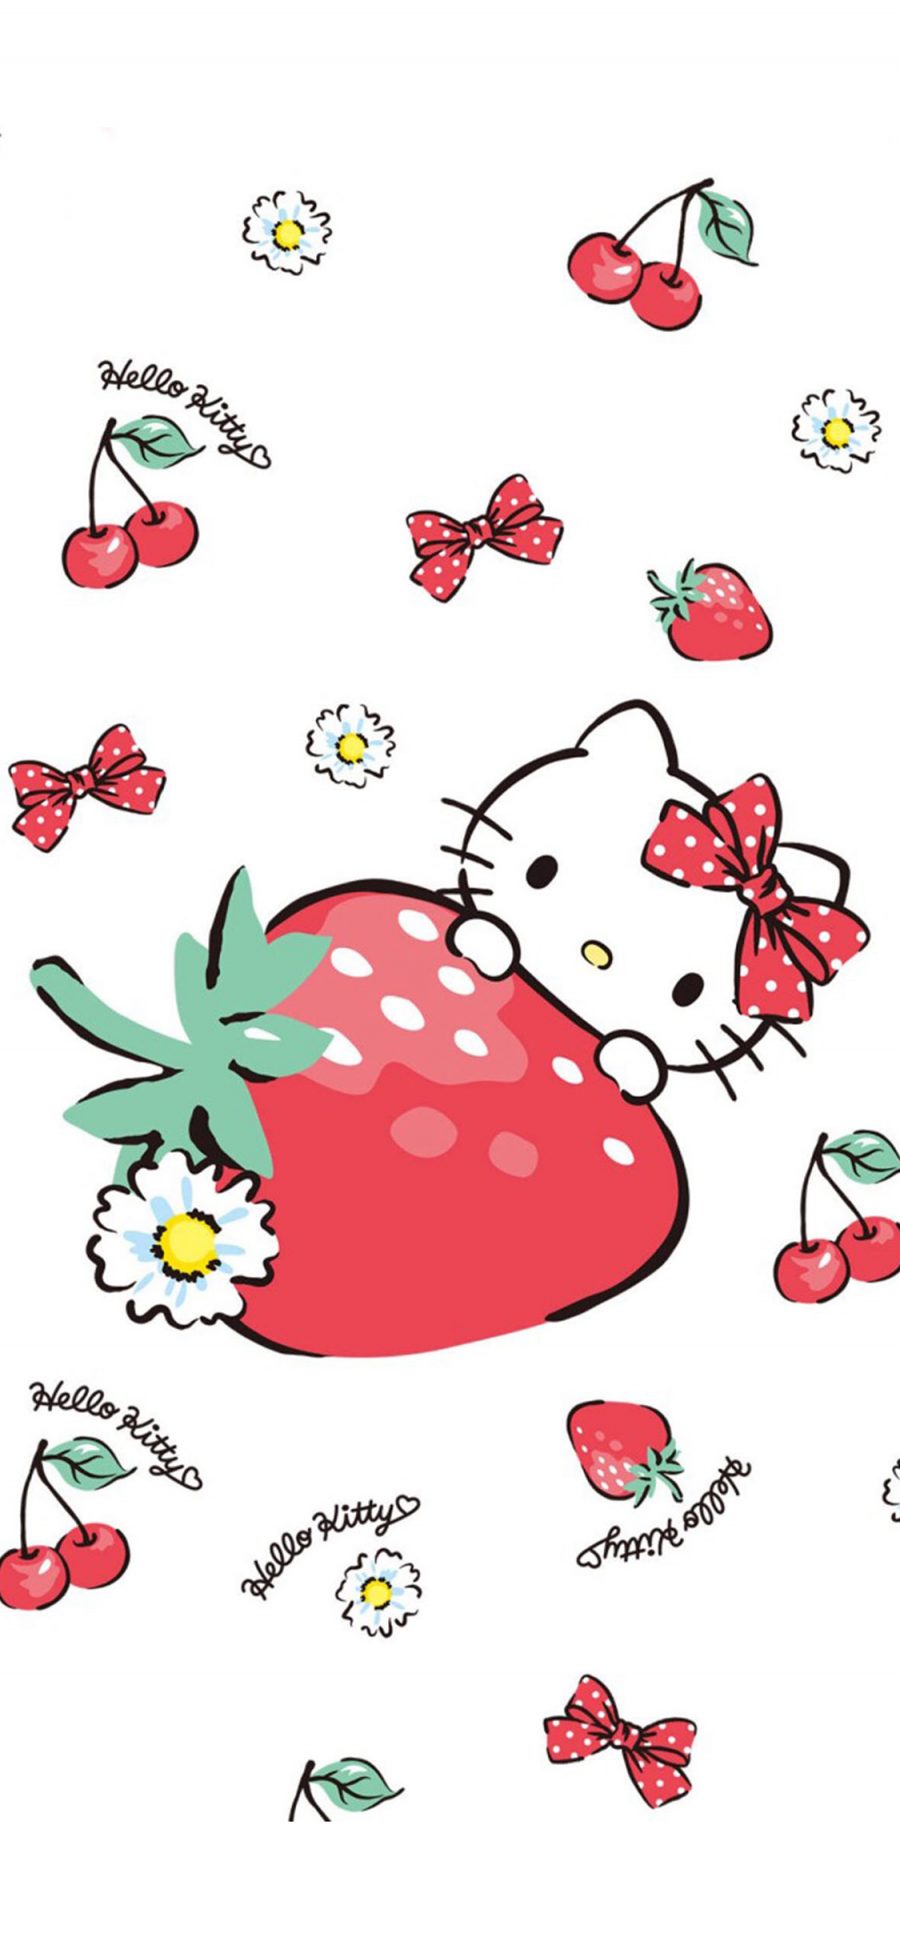 [2436×1125]Hello kitty 动画 草莓 可爱 苹果手机动漫壁纸图片